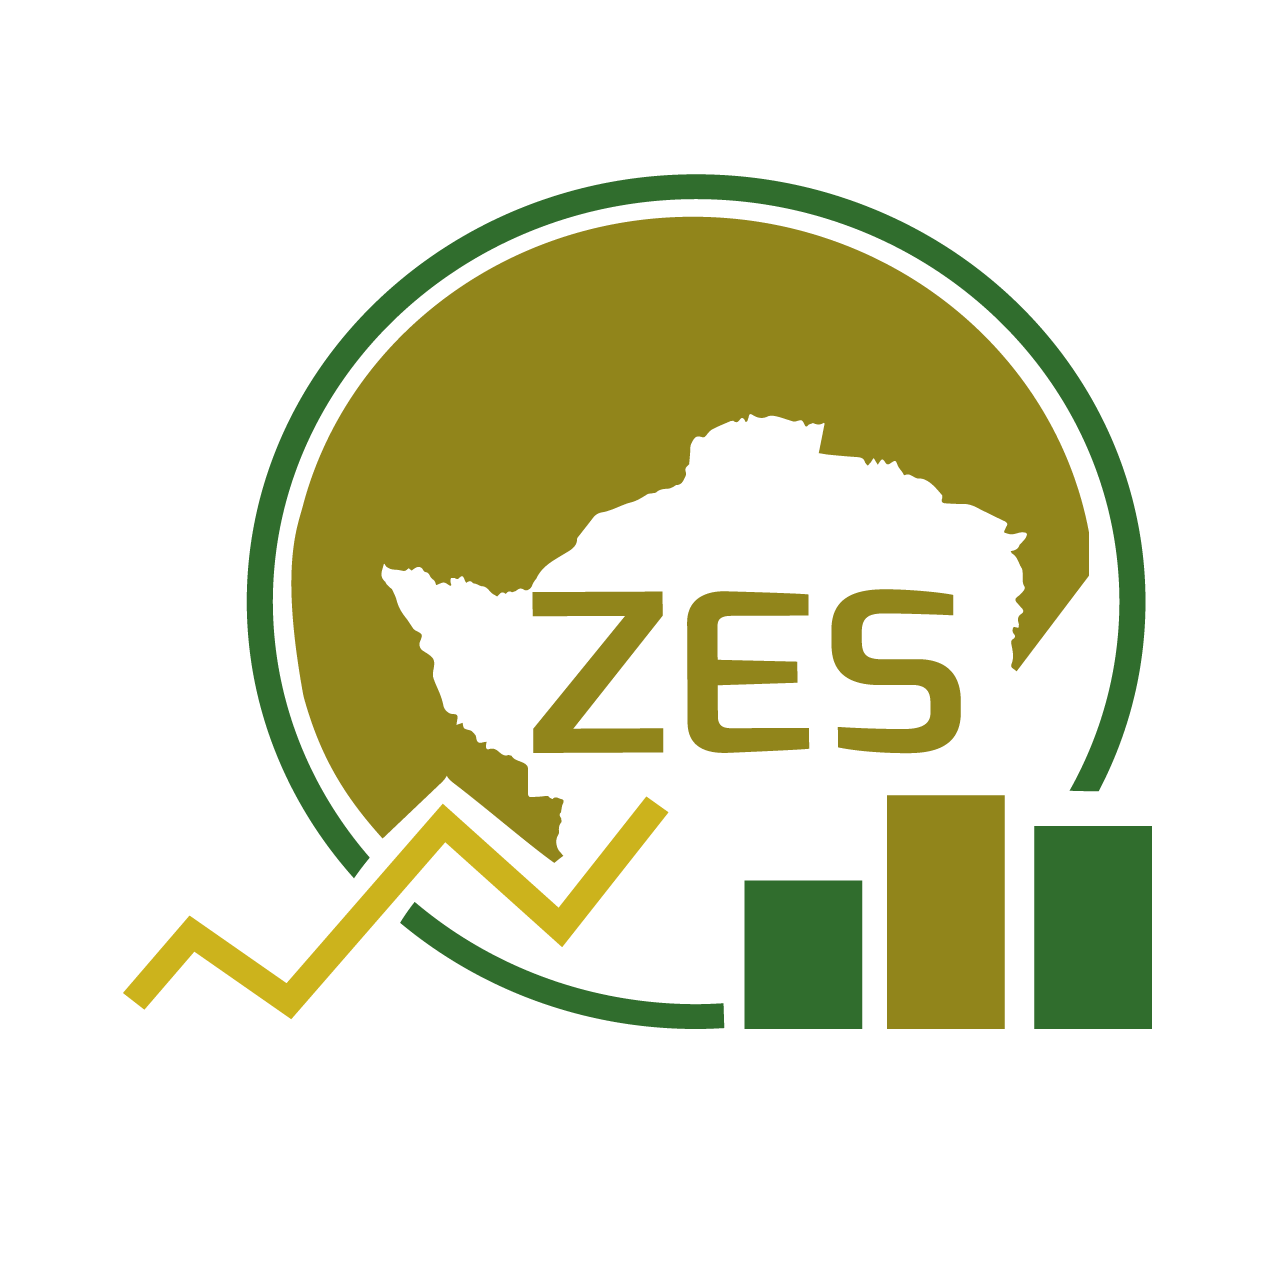 Zimbabwe Economics Society